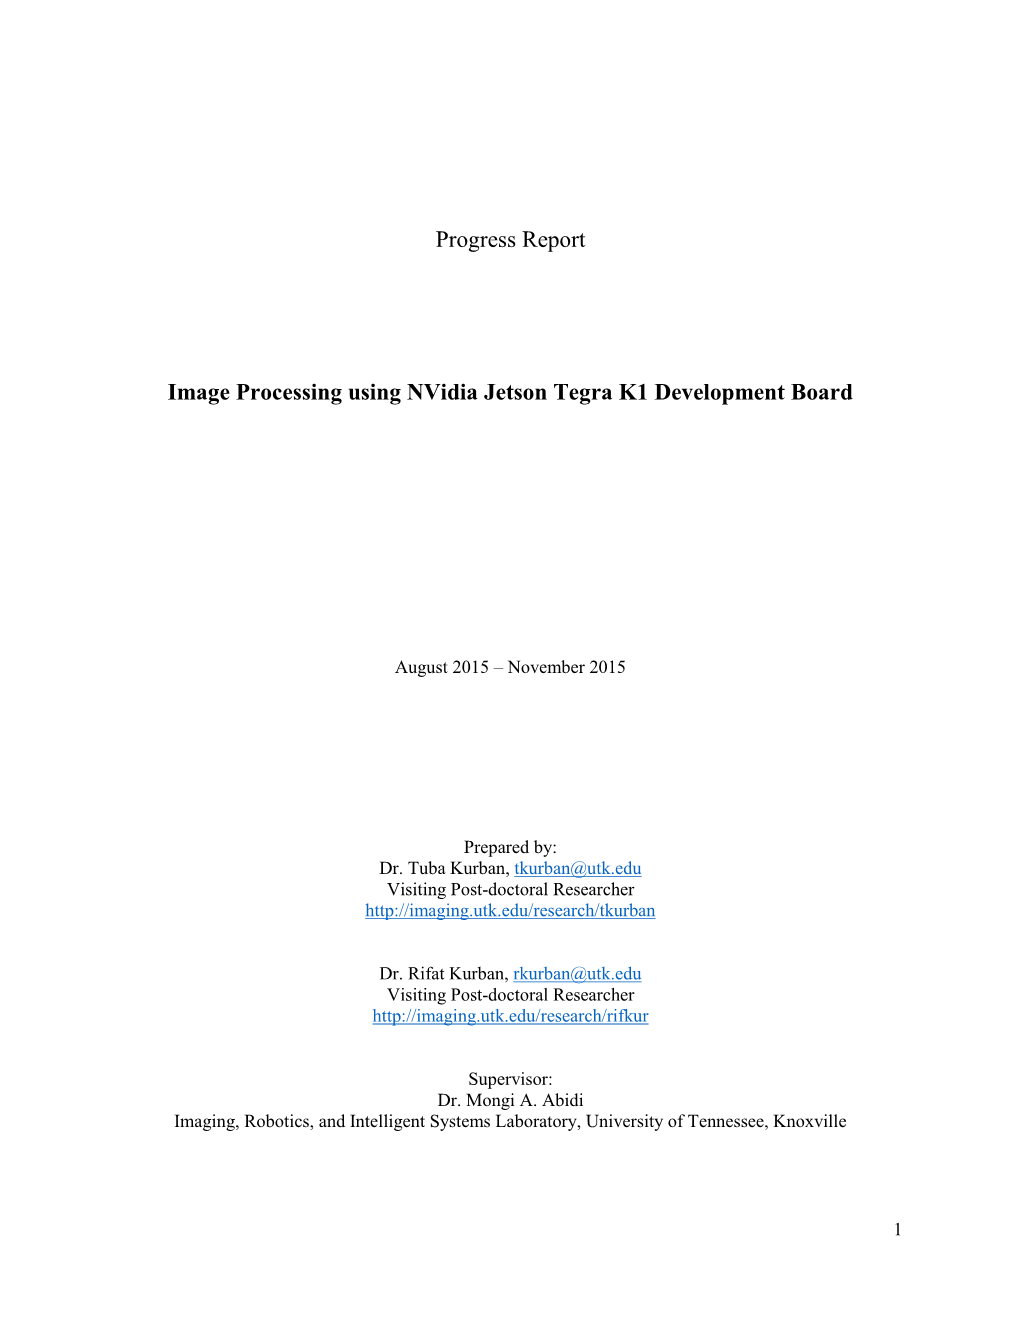 Progress Report Image Processing Using Nvidia Jetson Tegra K1